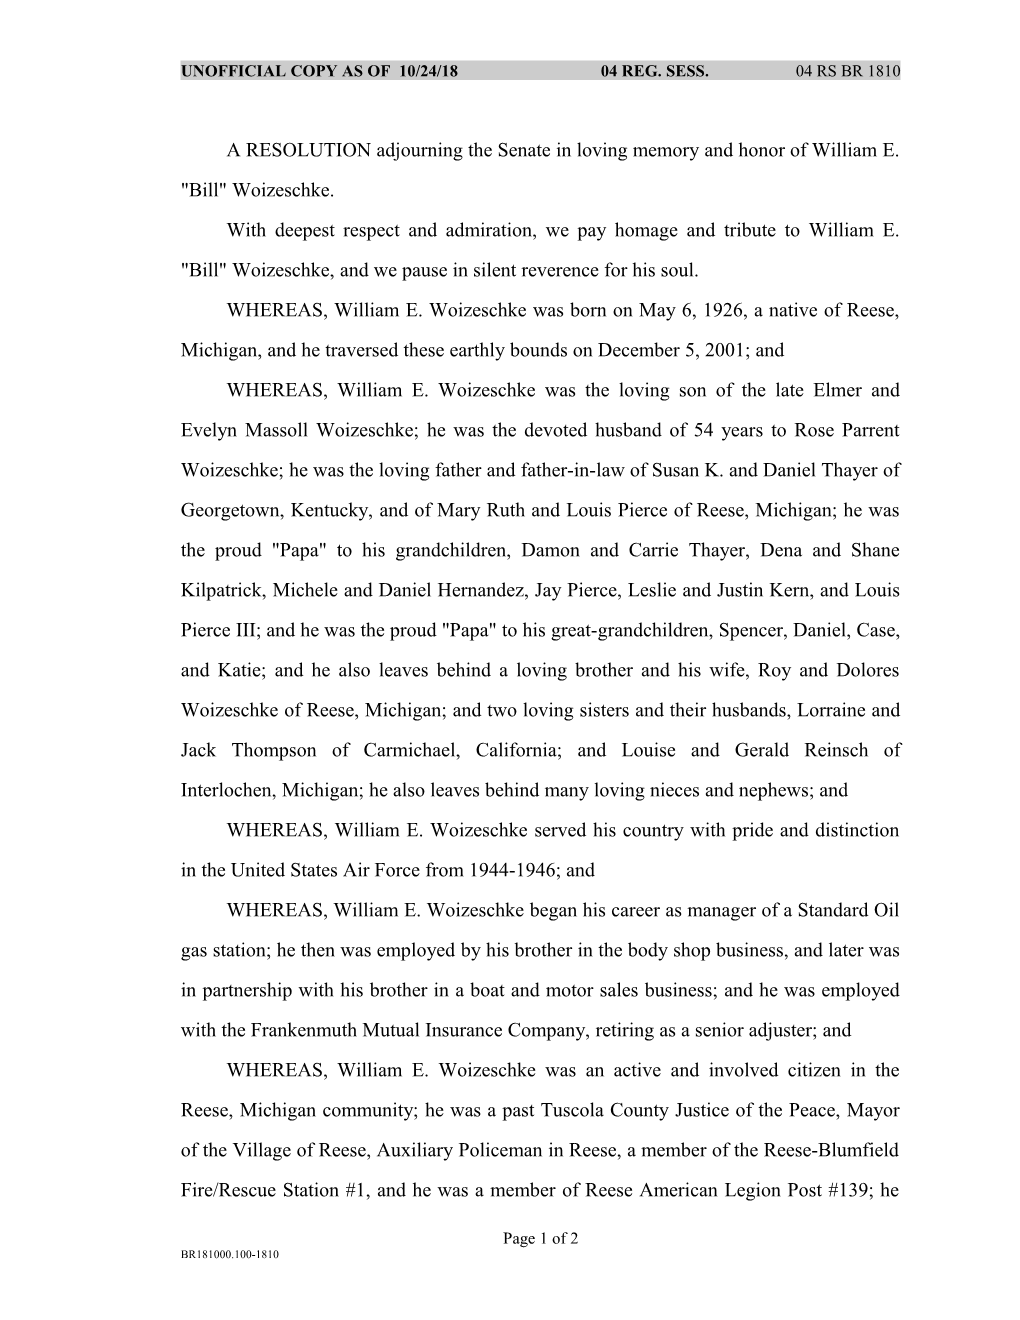 A RESOLUTION Adjourning the Senate in Loving Memory and Honor of William E. Bill Woizeschke